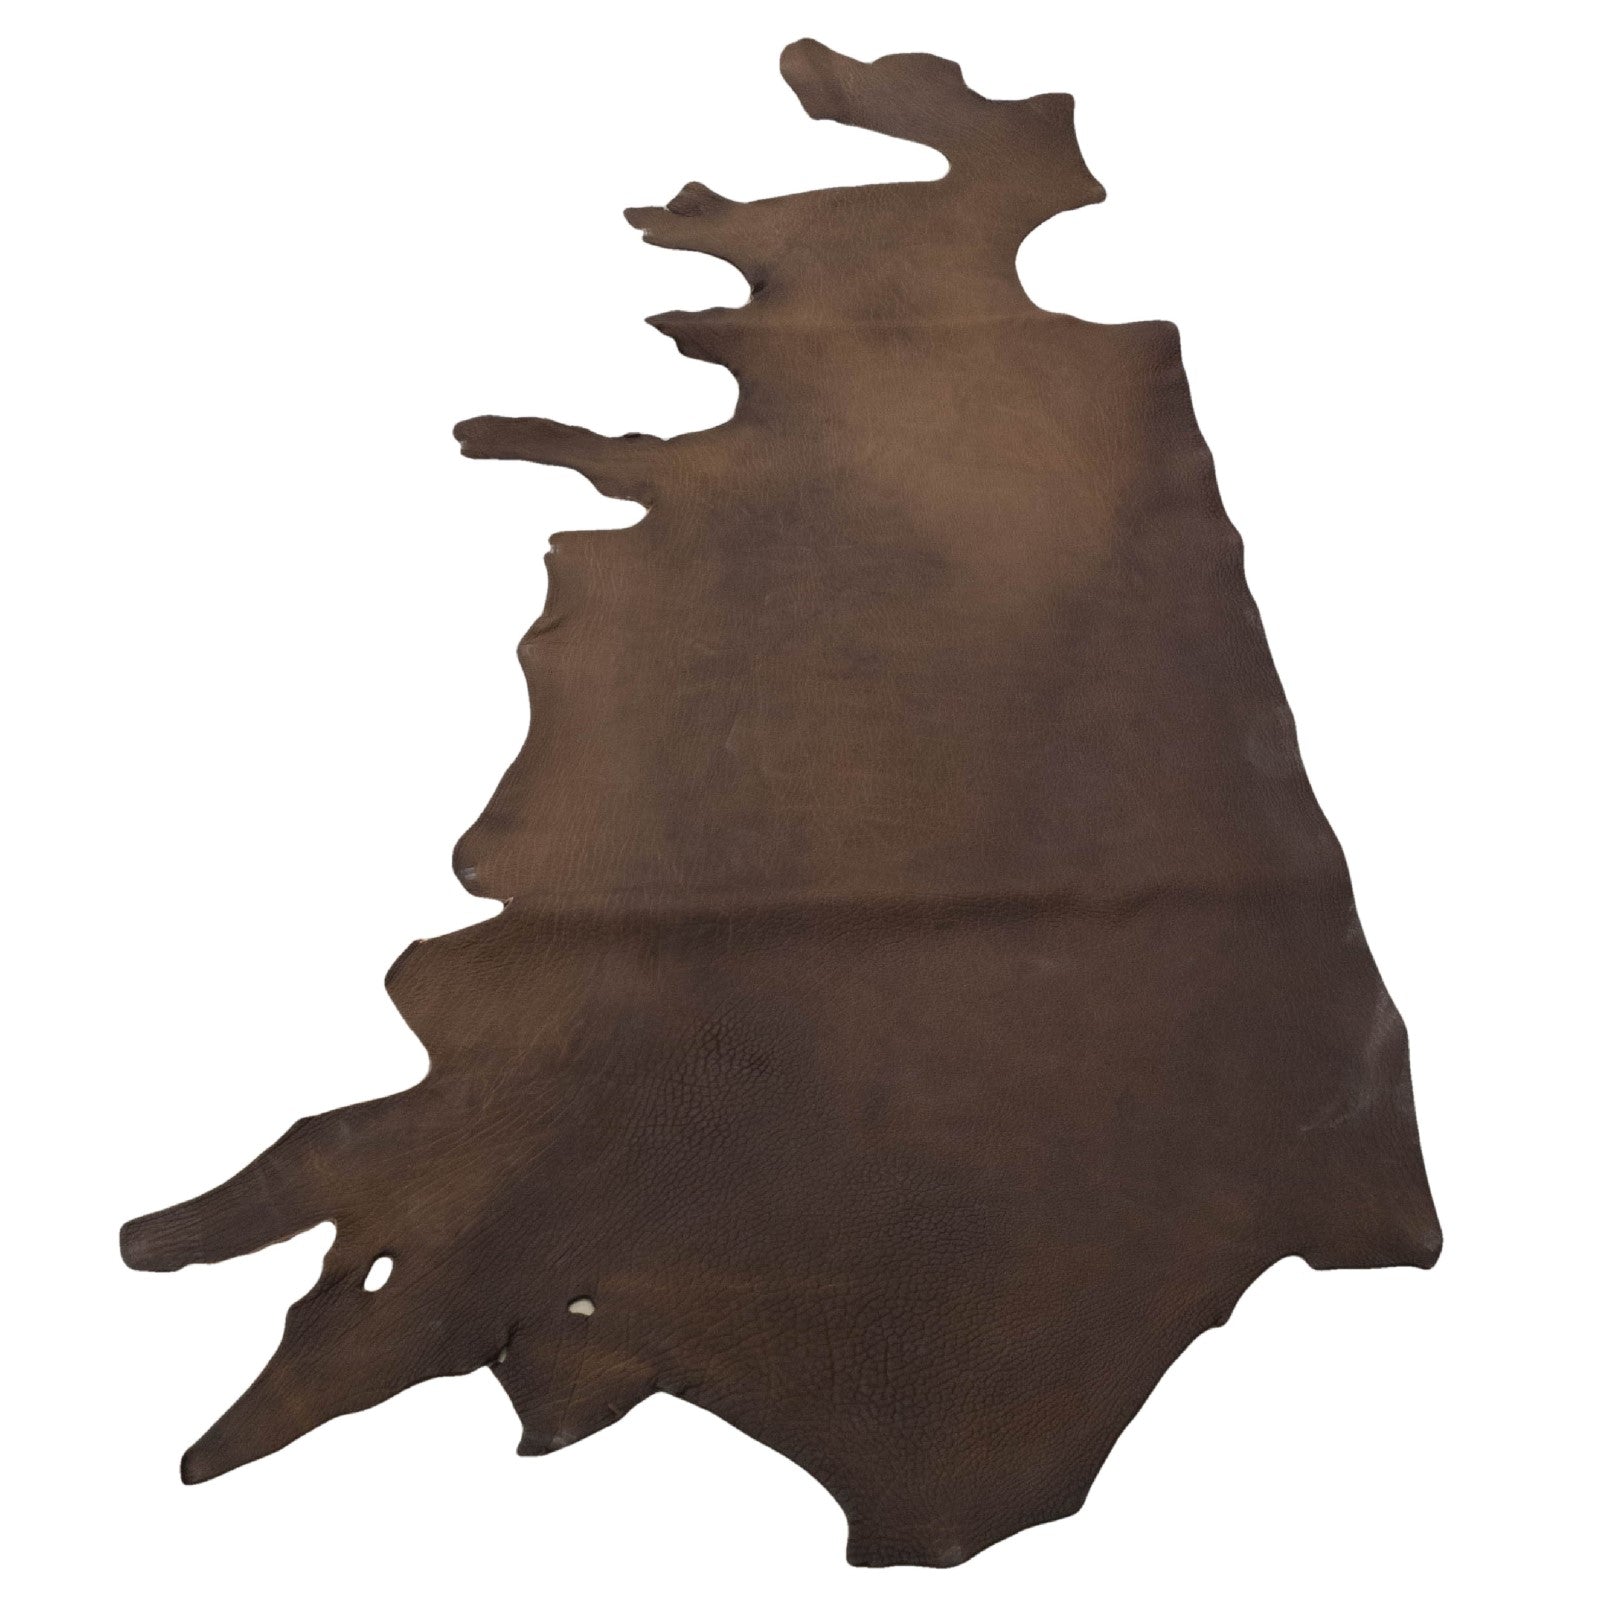 Burnt Bark Brown, 7.5-8.5 oz, 9-20 Sq Ft, Bison Sides, 15-17 Sq Ft | The Leather Guy